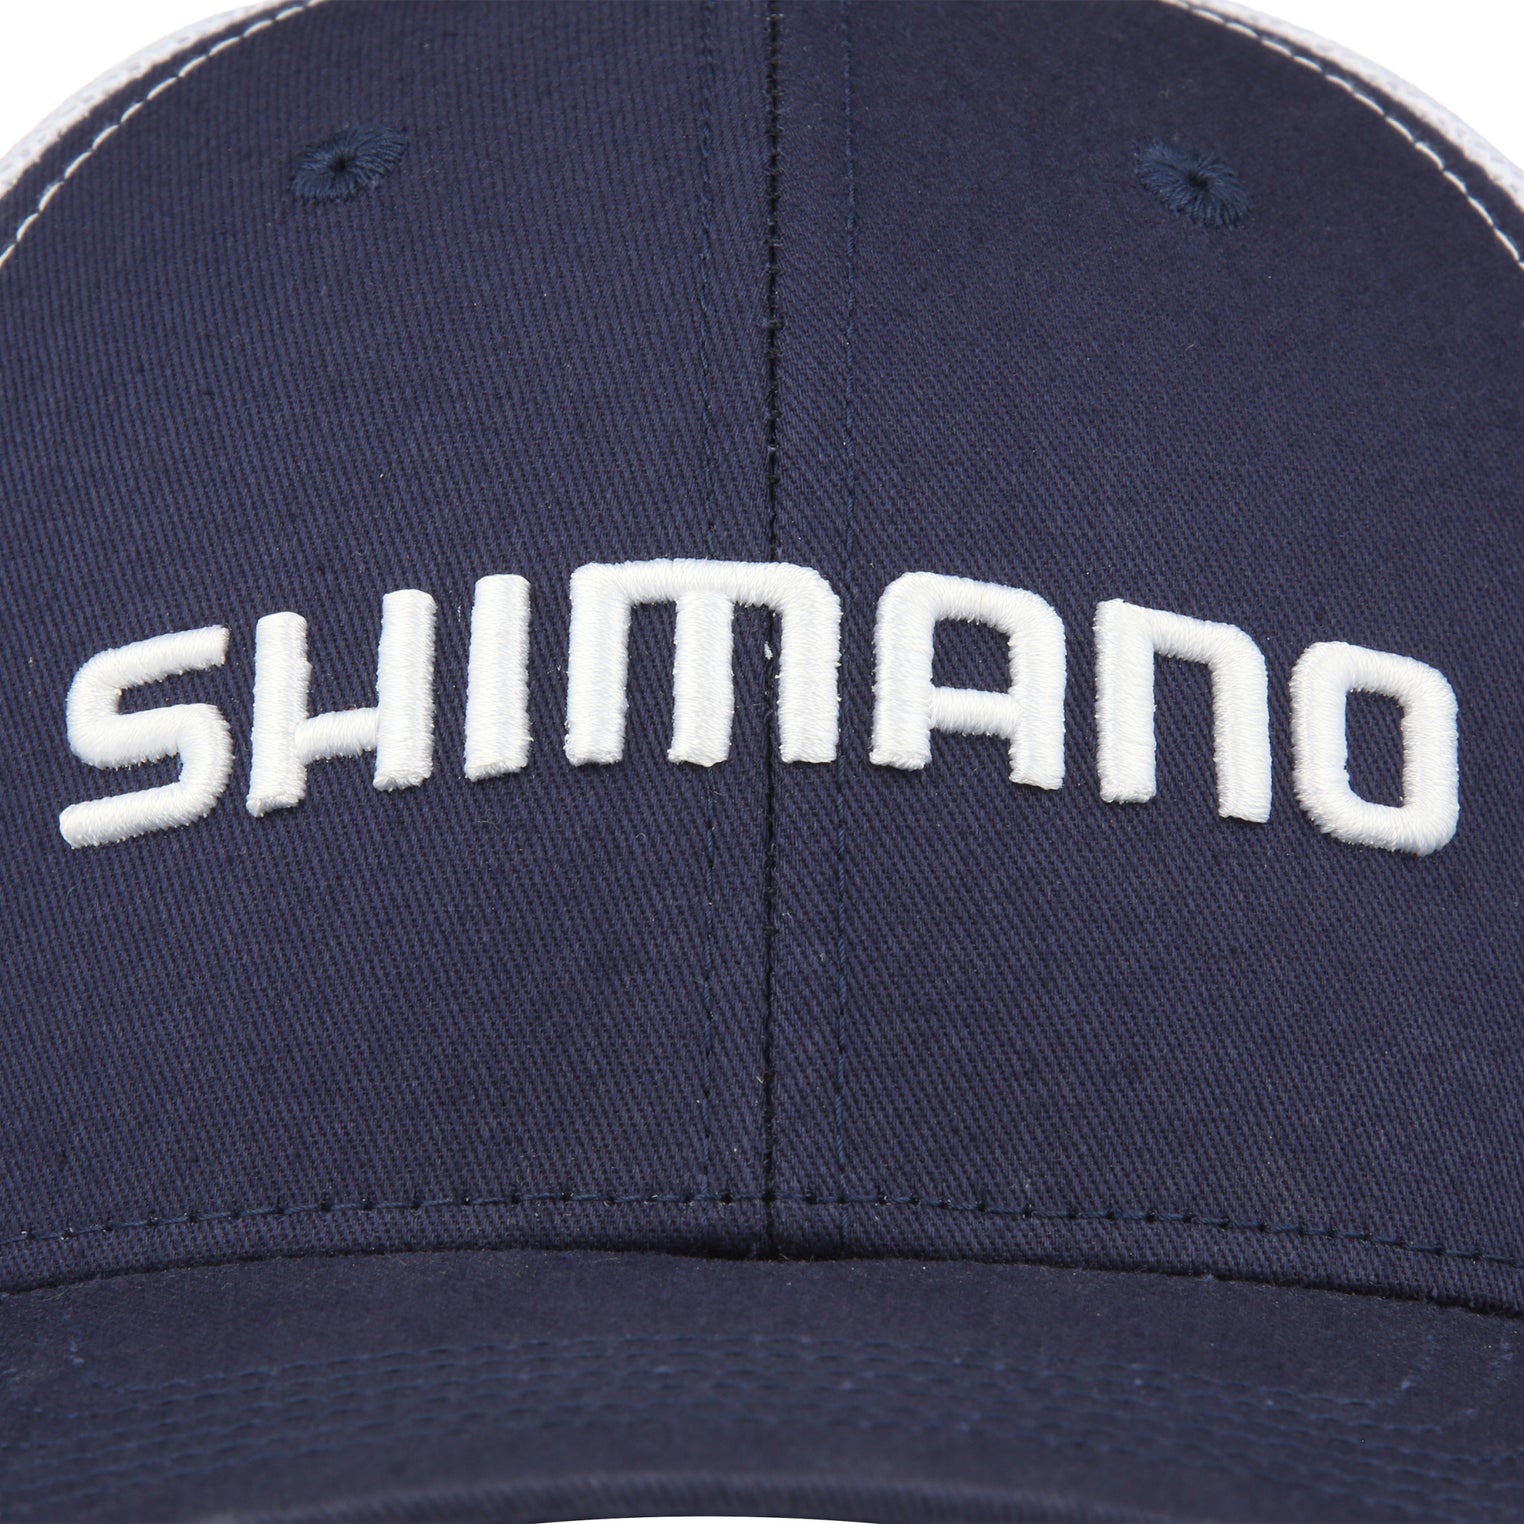 ORIGINAL TRUCKER CAP – Shimano US Fish Shop